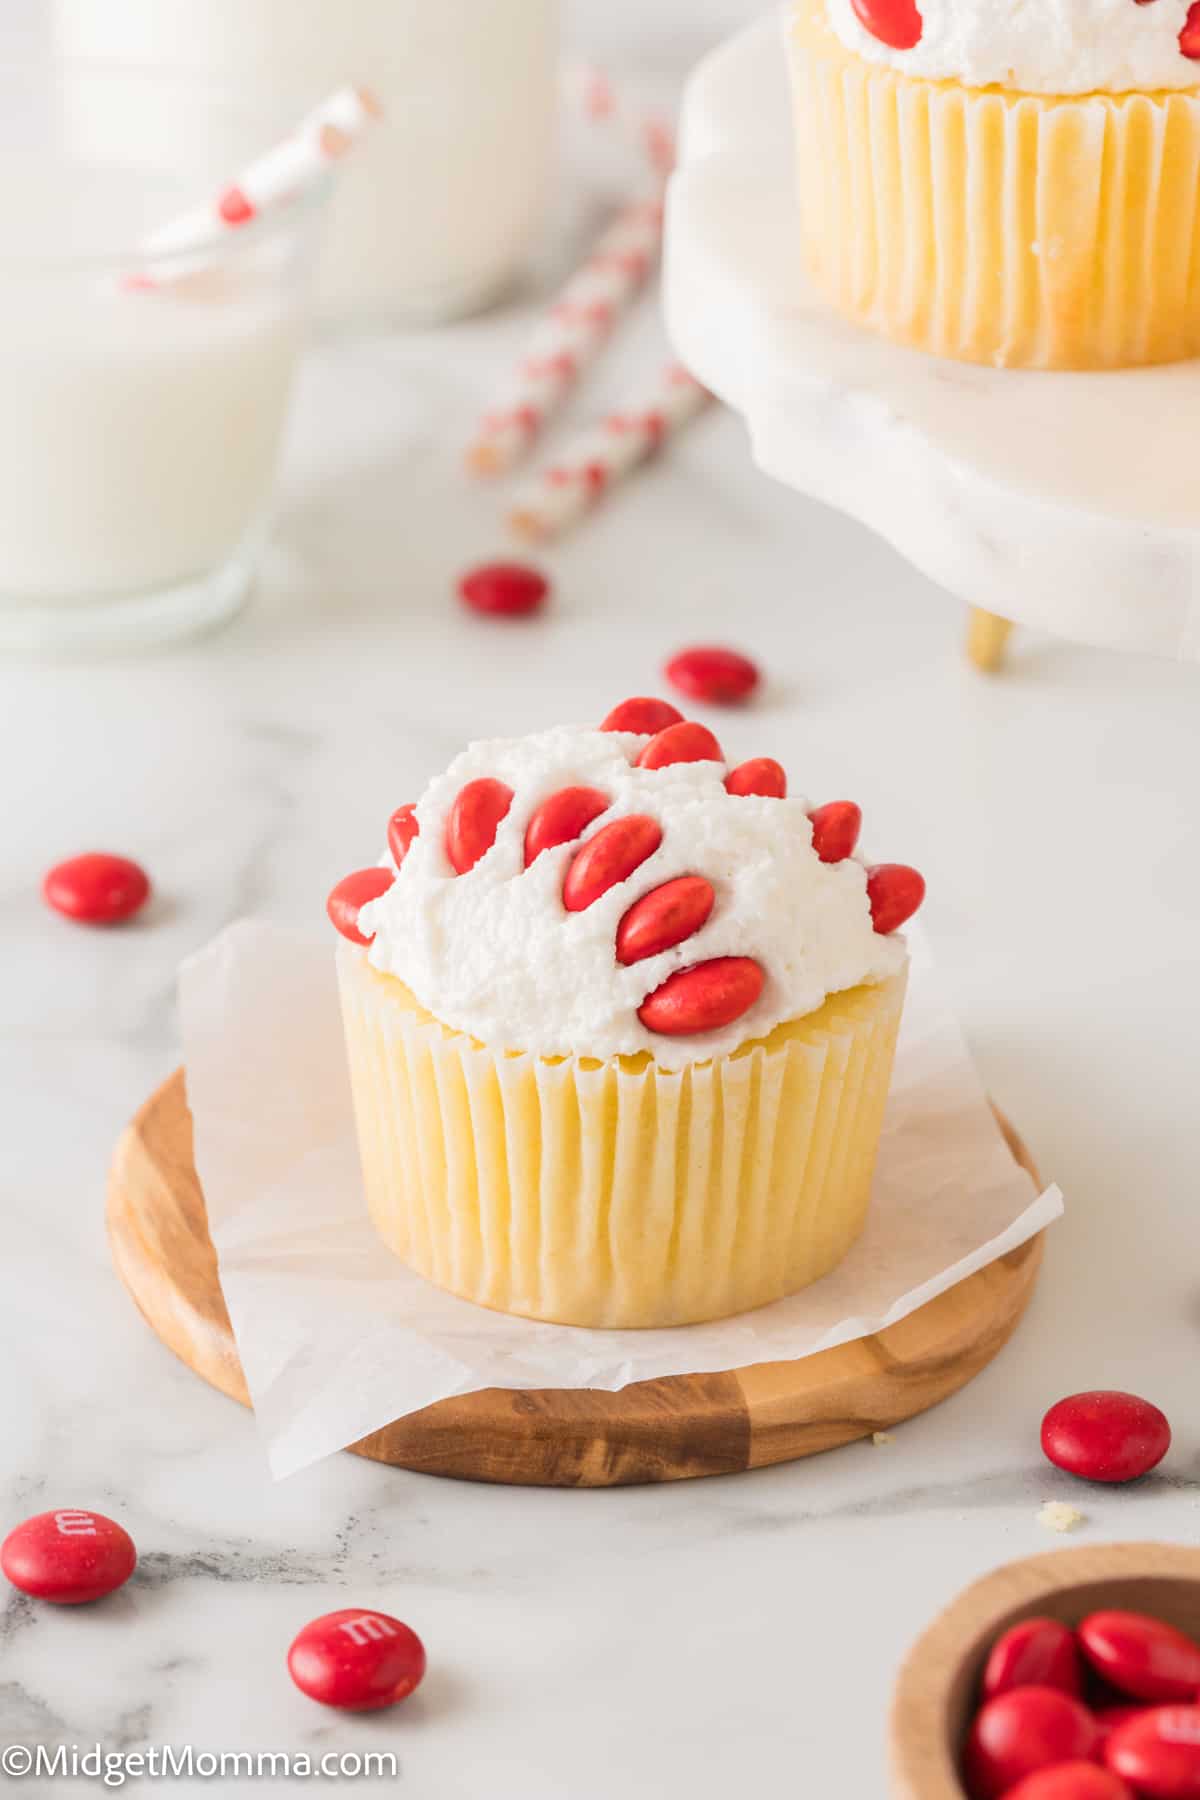 Vanilla cupcake with vanilla buttercream decorated like a baseball